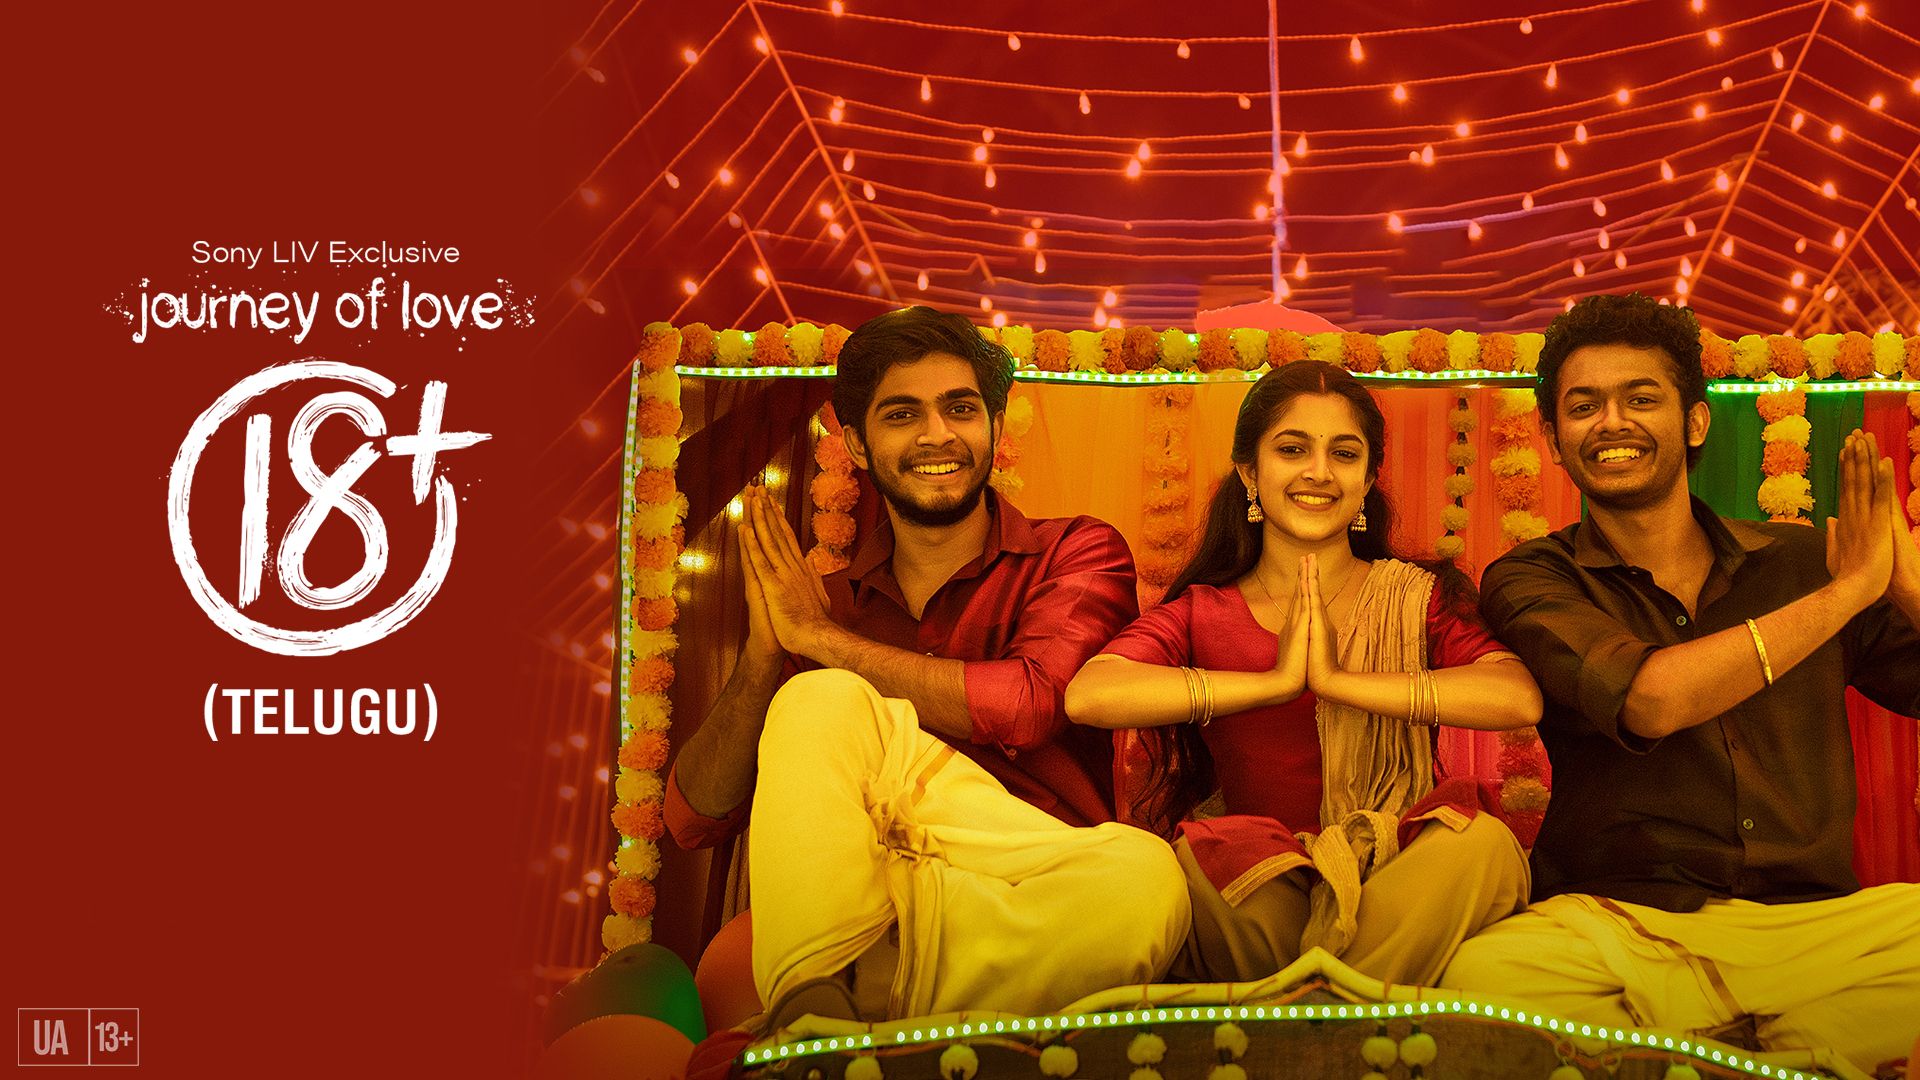 Journey Of Love 18 + (Telugu)